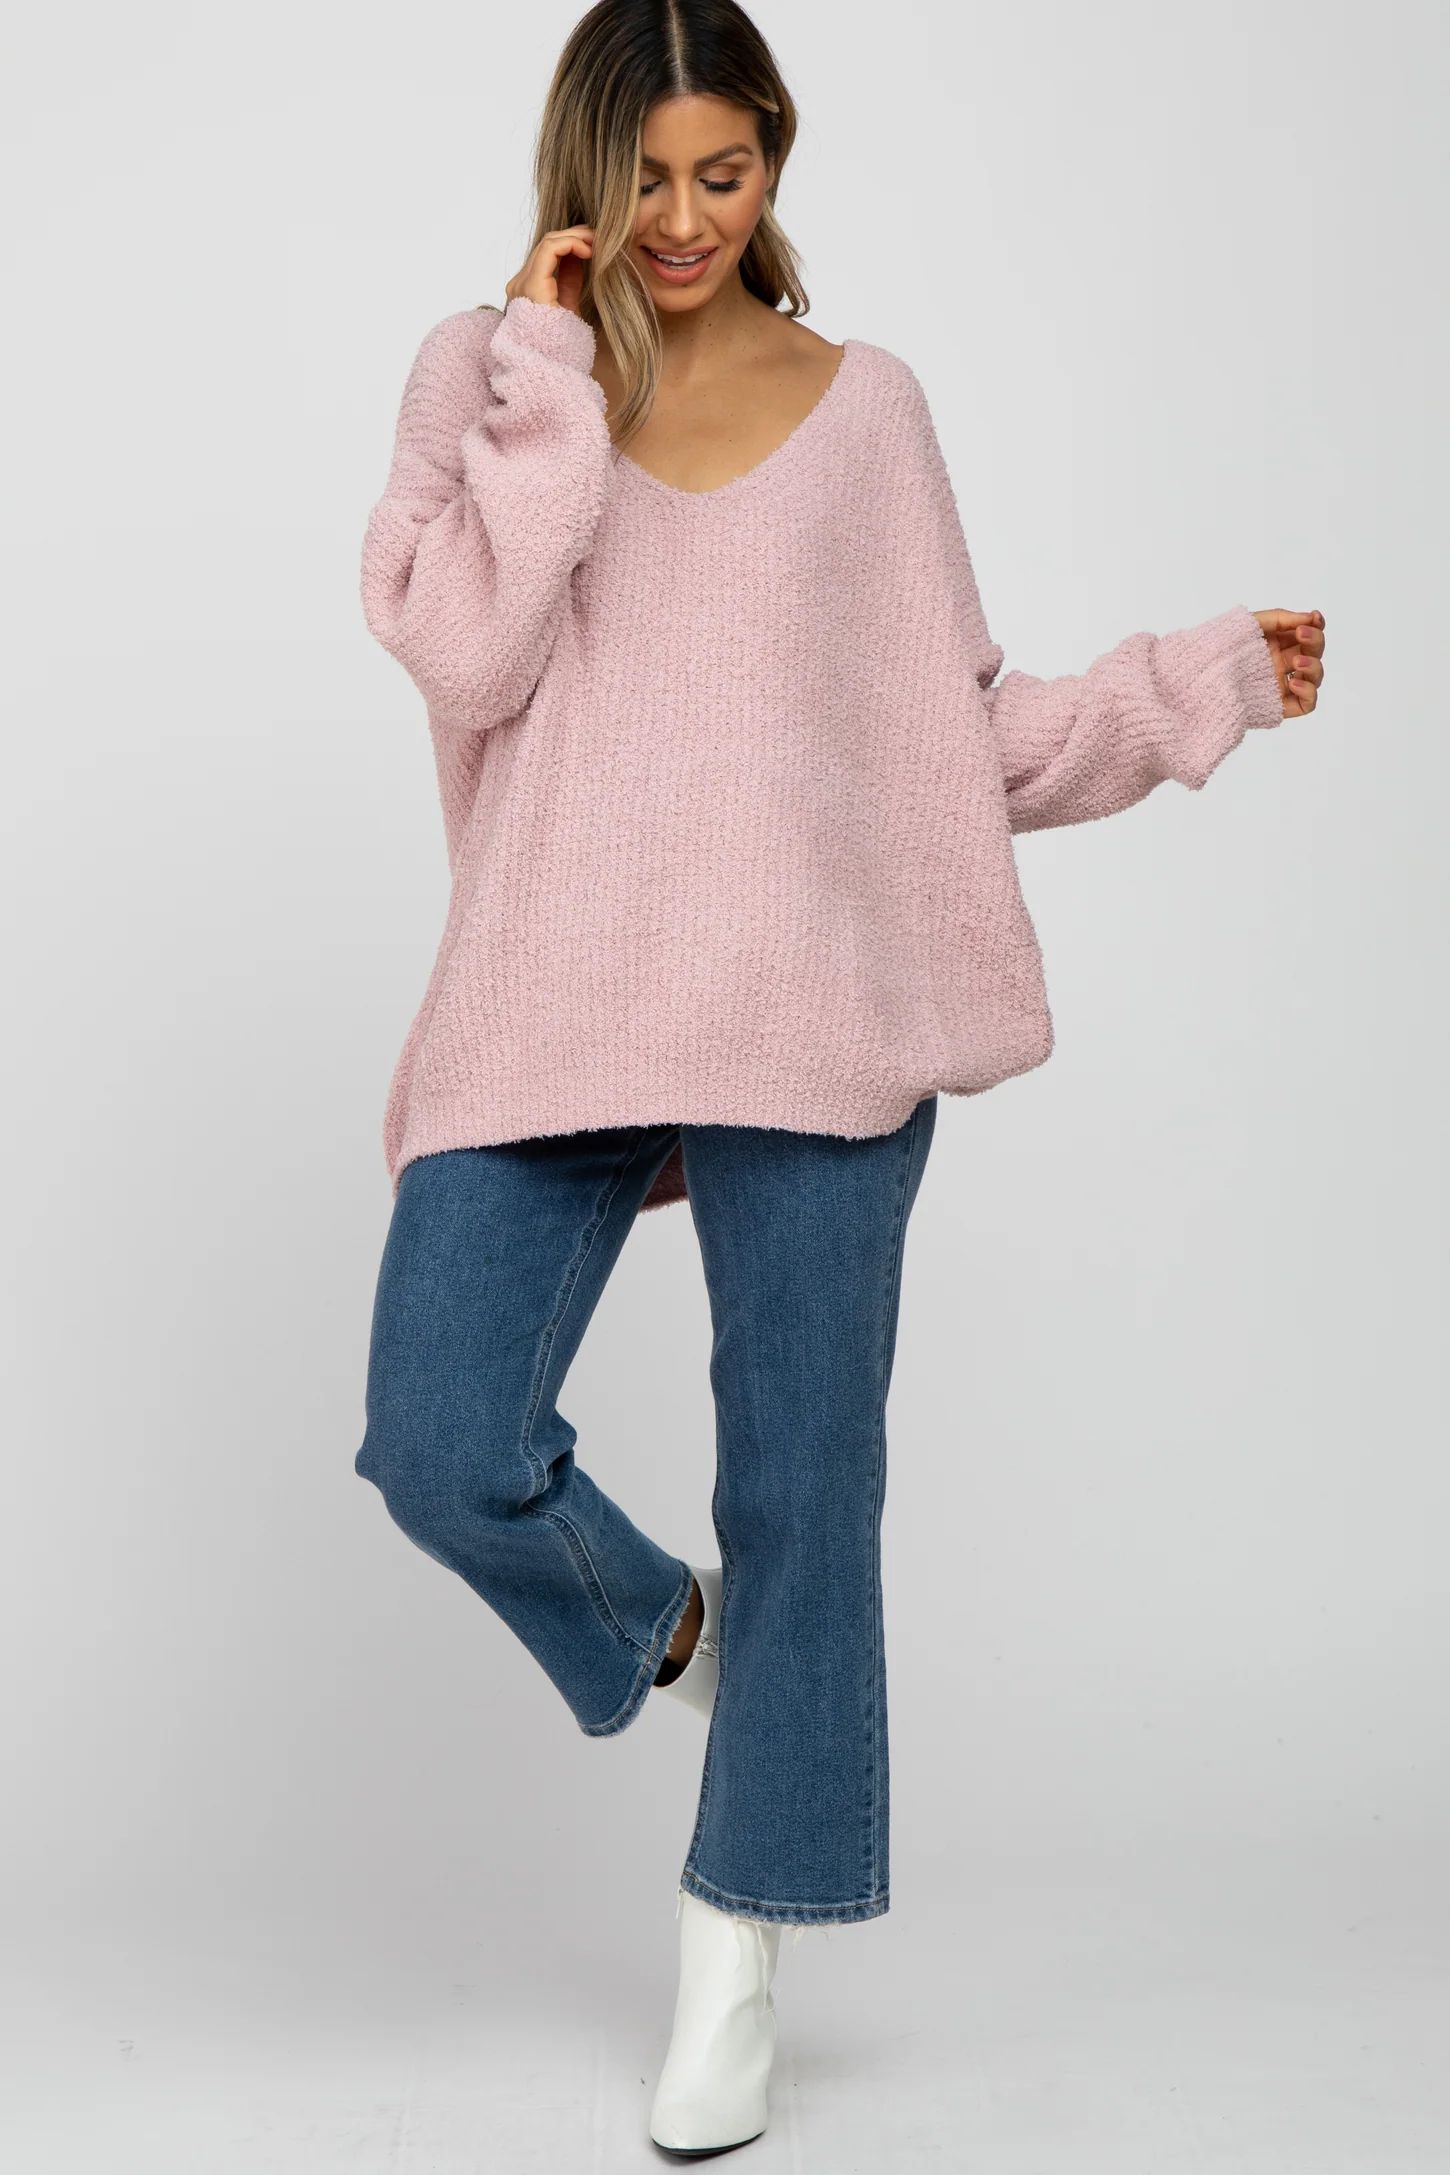 Light Pink V-Neck Soft Sweater | PinkBlush Maternity